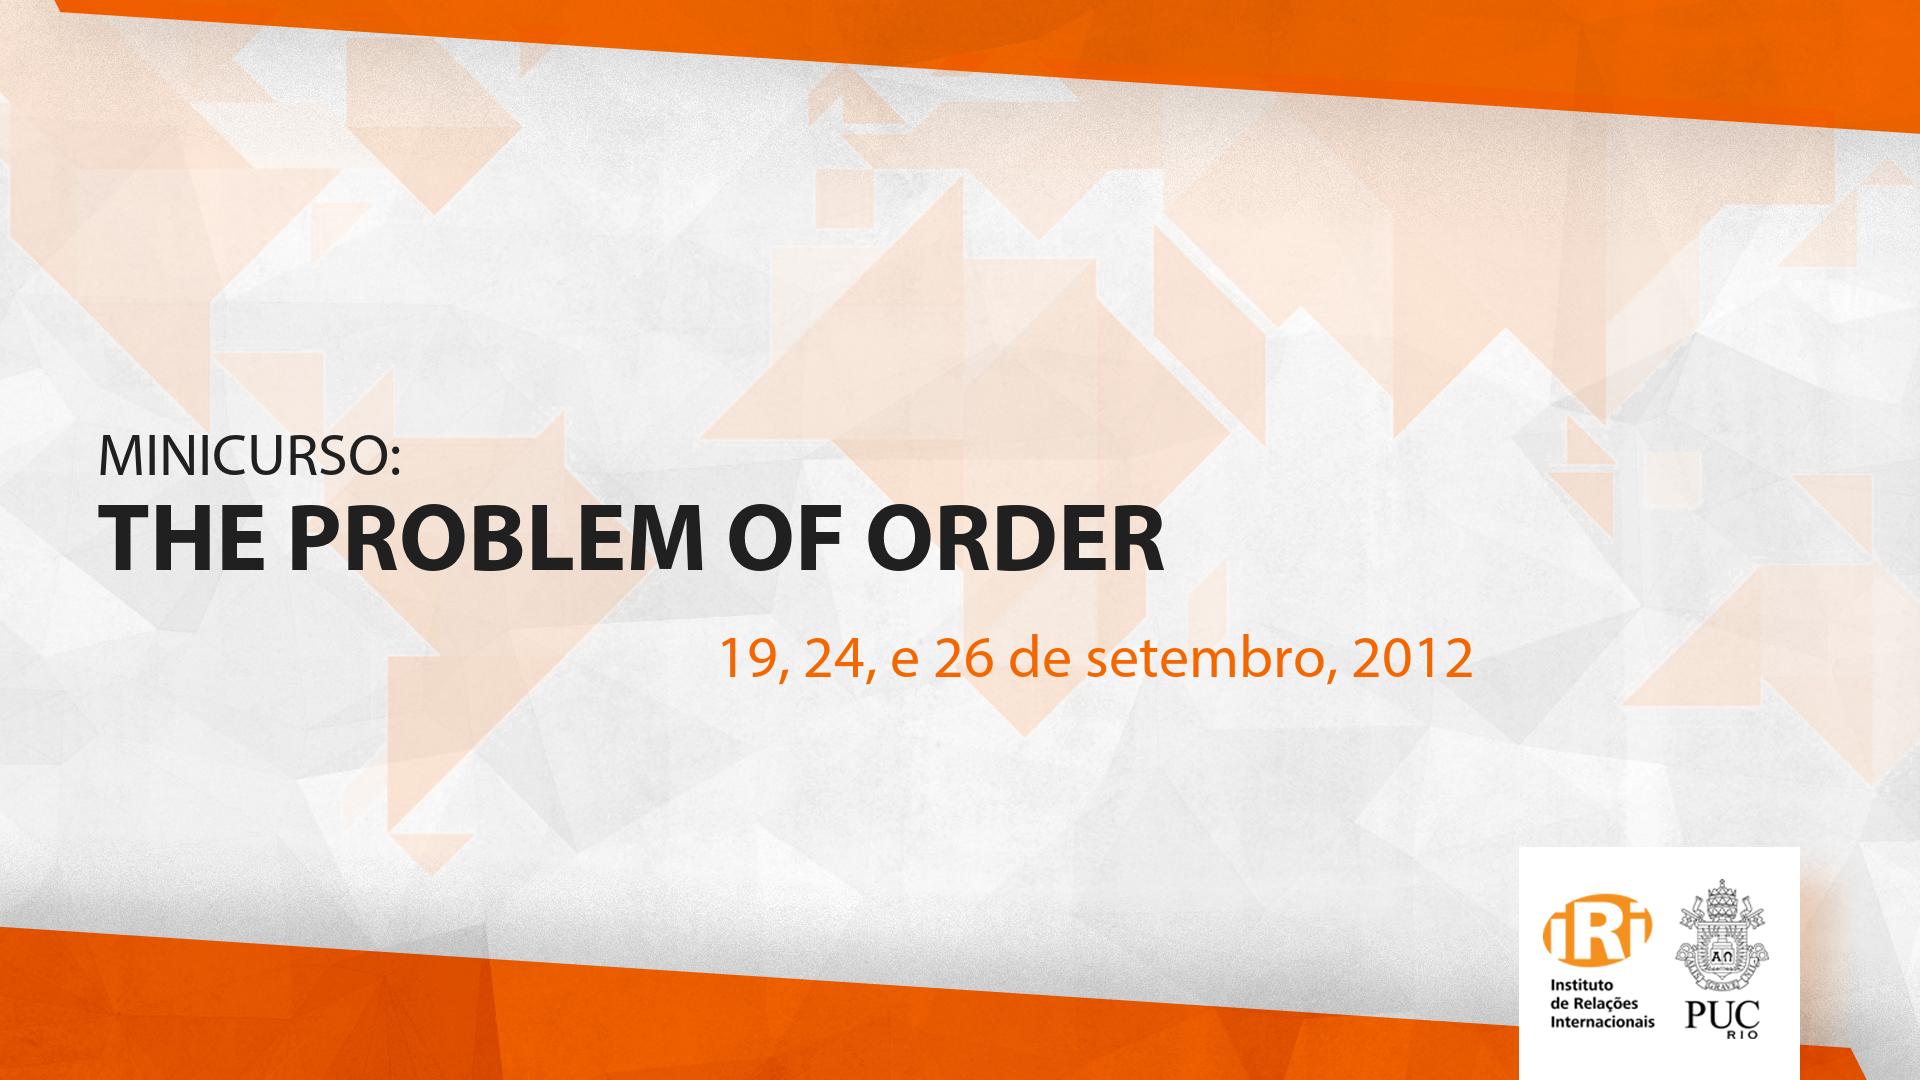 Minicurso The Problem of Order